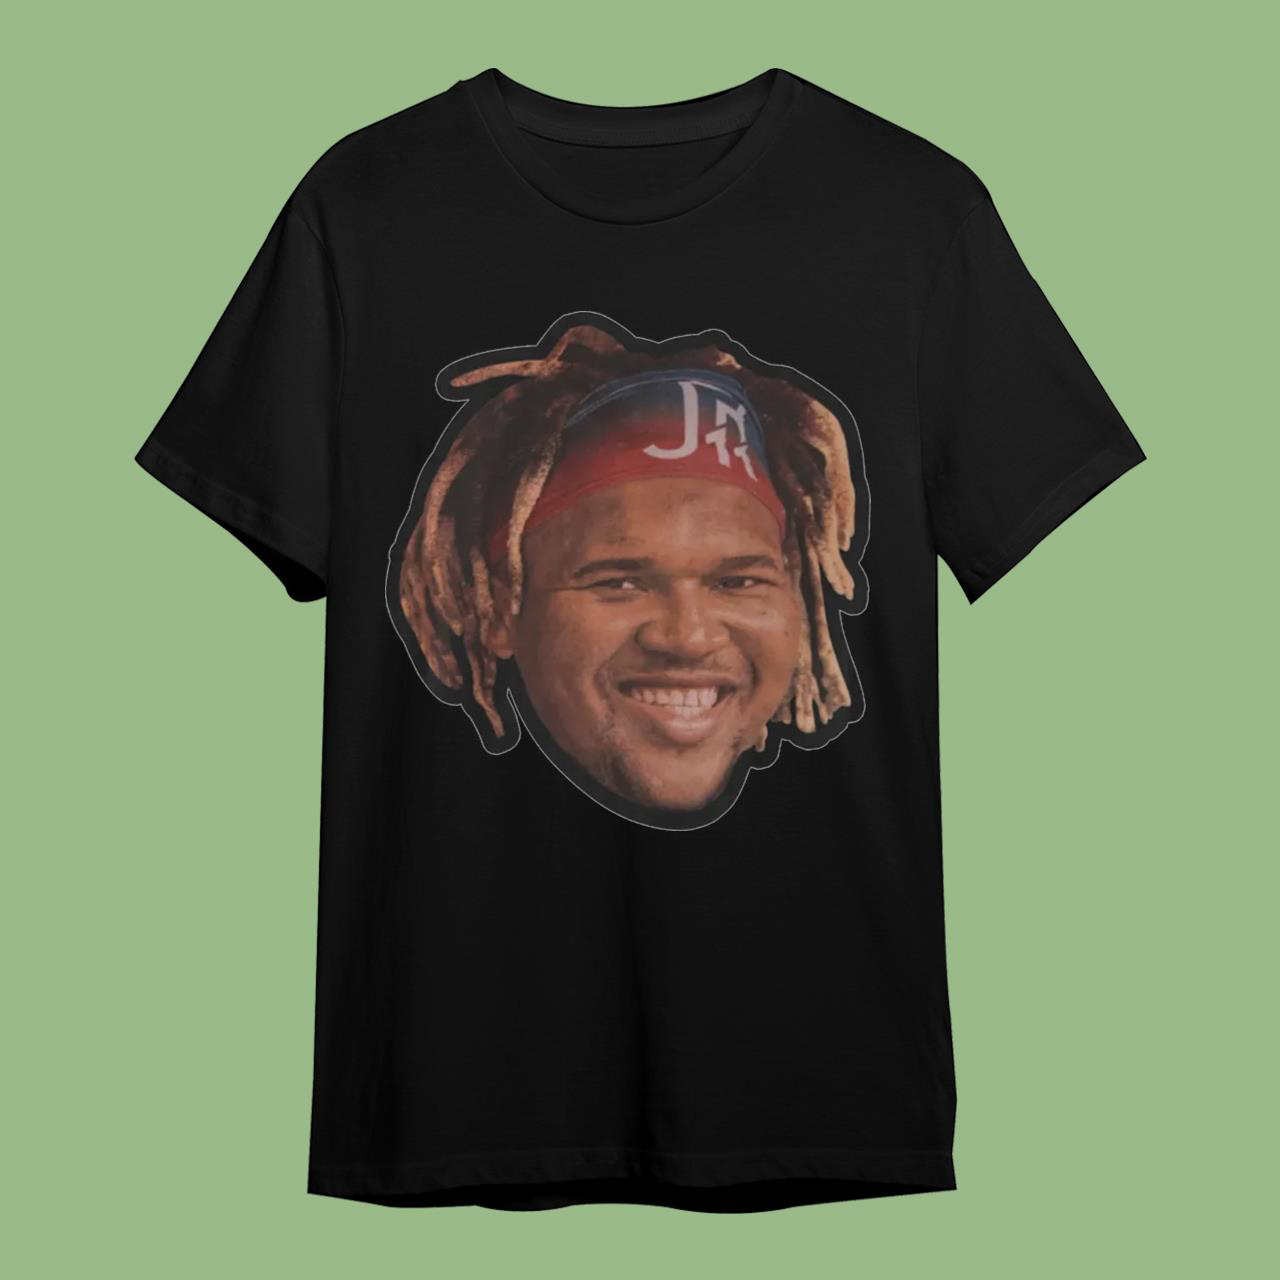 Jose Ramirez Funny T-Shirt